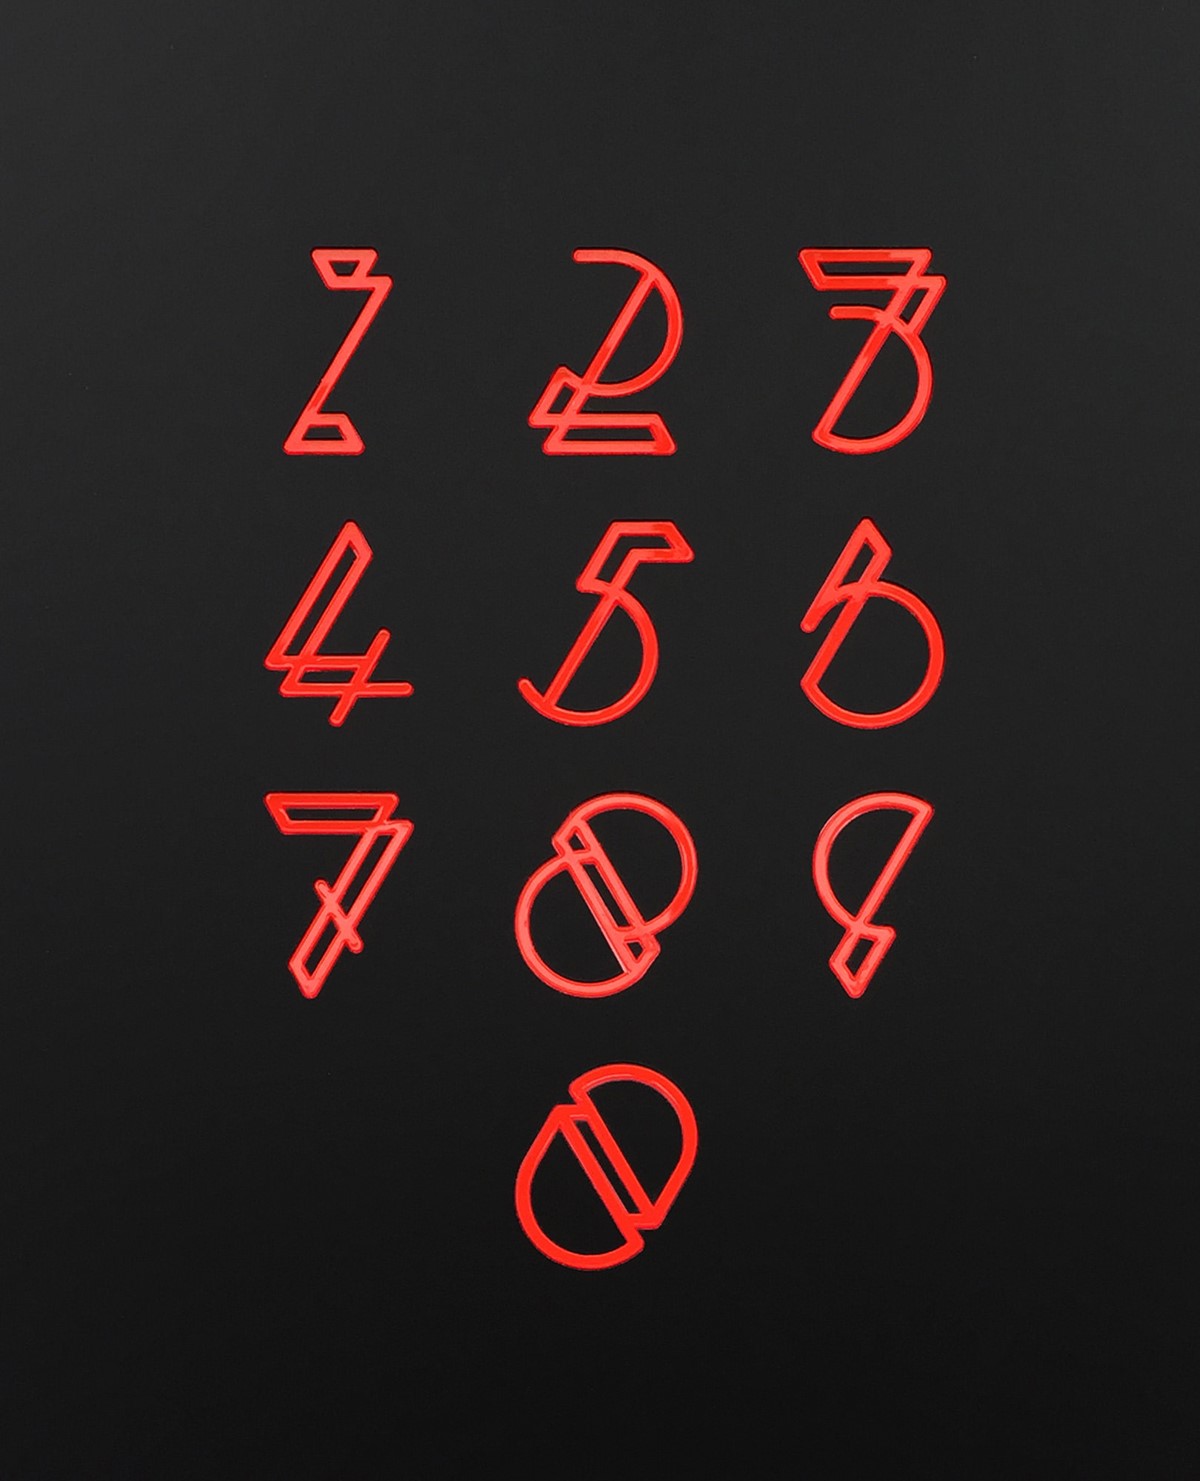 Flex. Fred Aldous. Experimental laser cut numerals back lit. Typography design by Superfried.